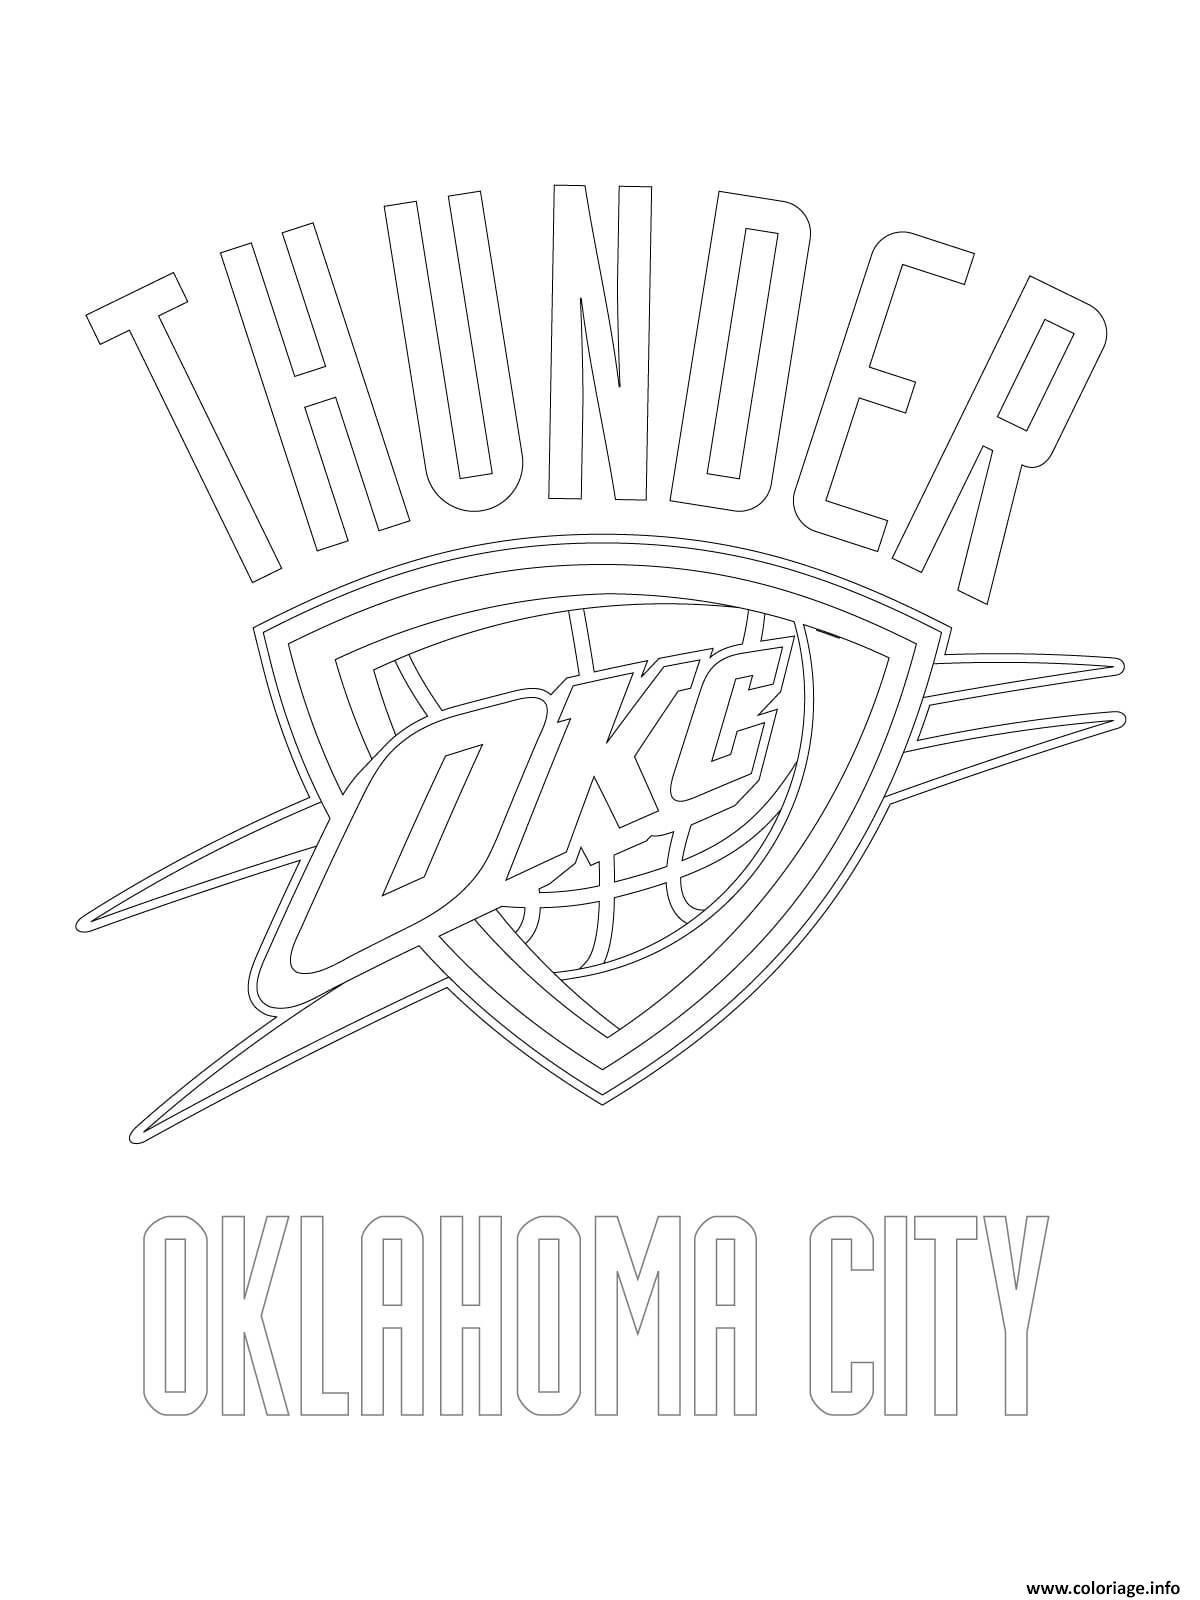 Dessin oklahoma city thunder logo nba sport Coloriage Gratuit à Imprimer